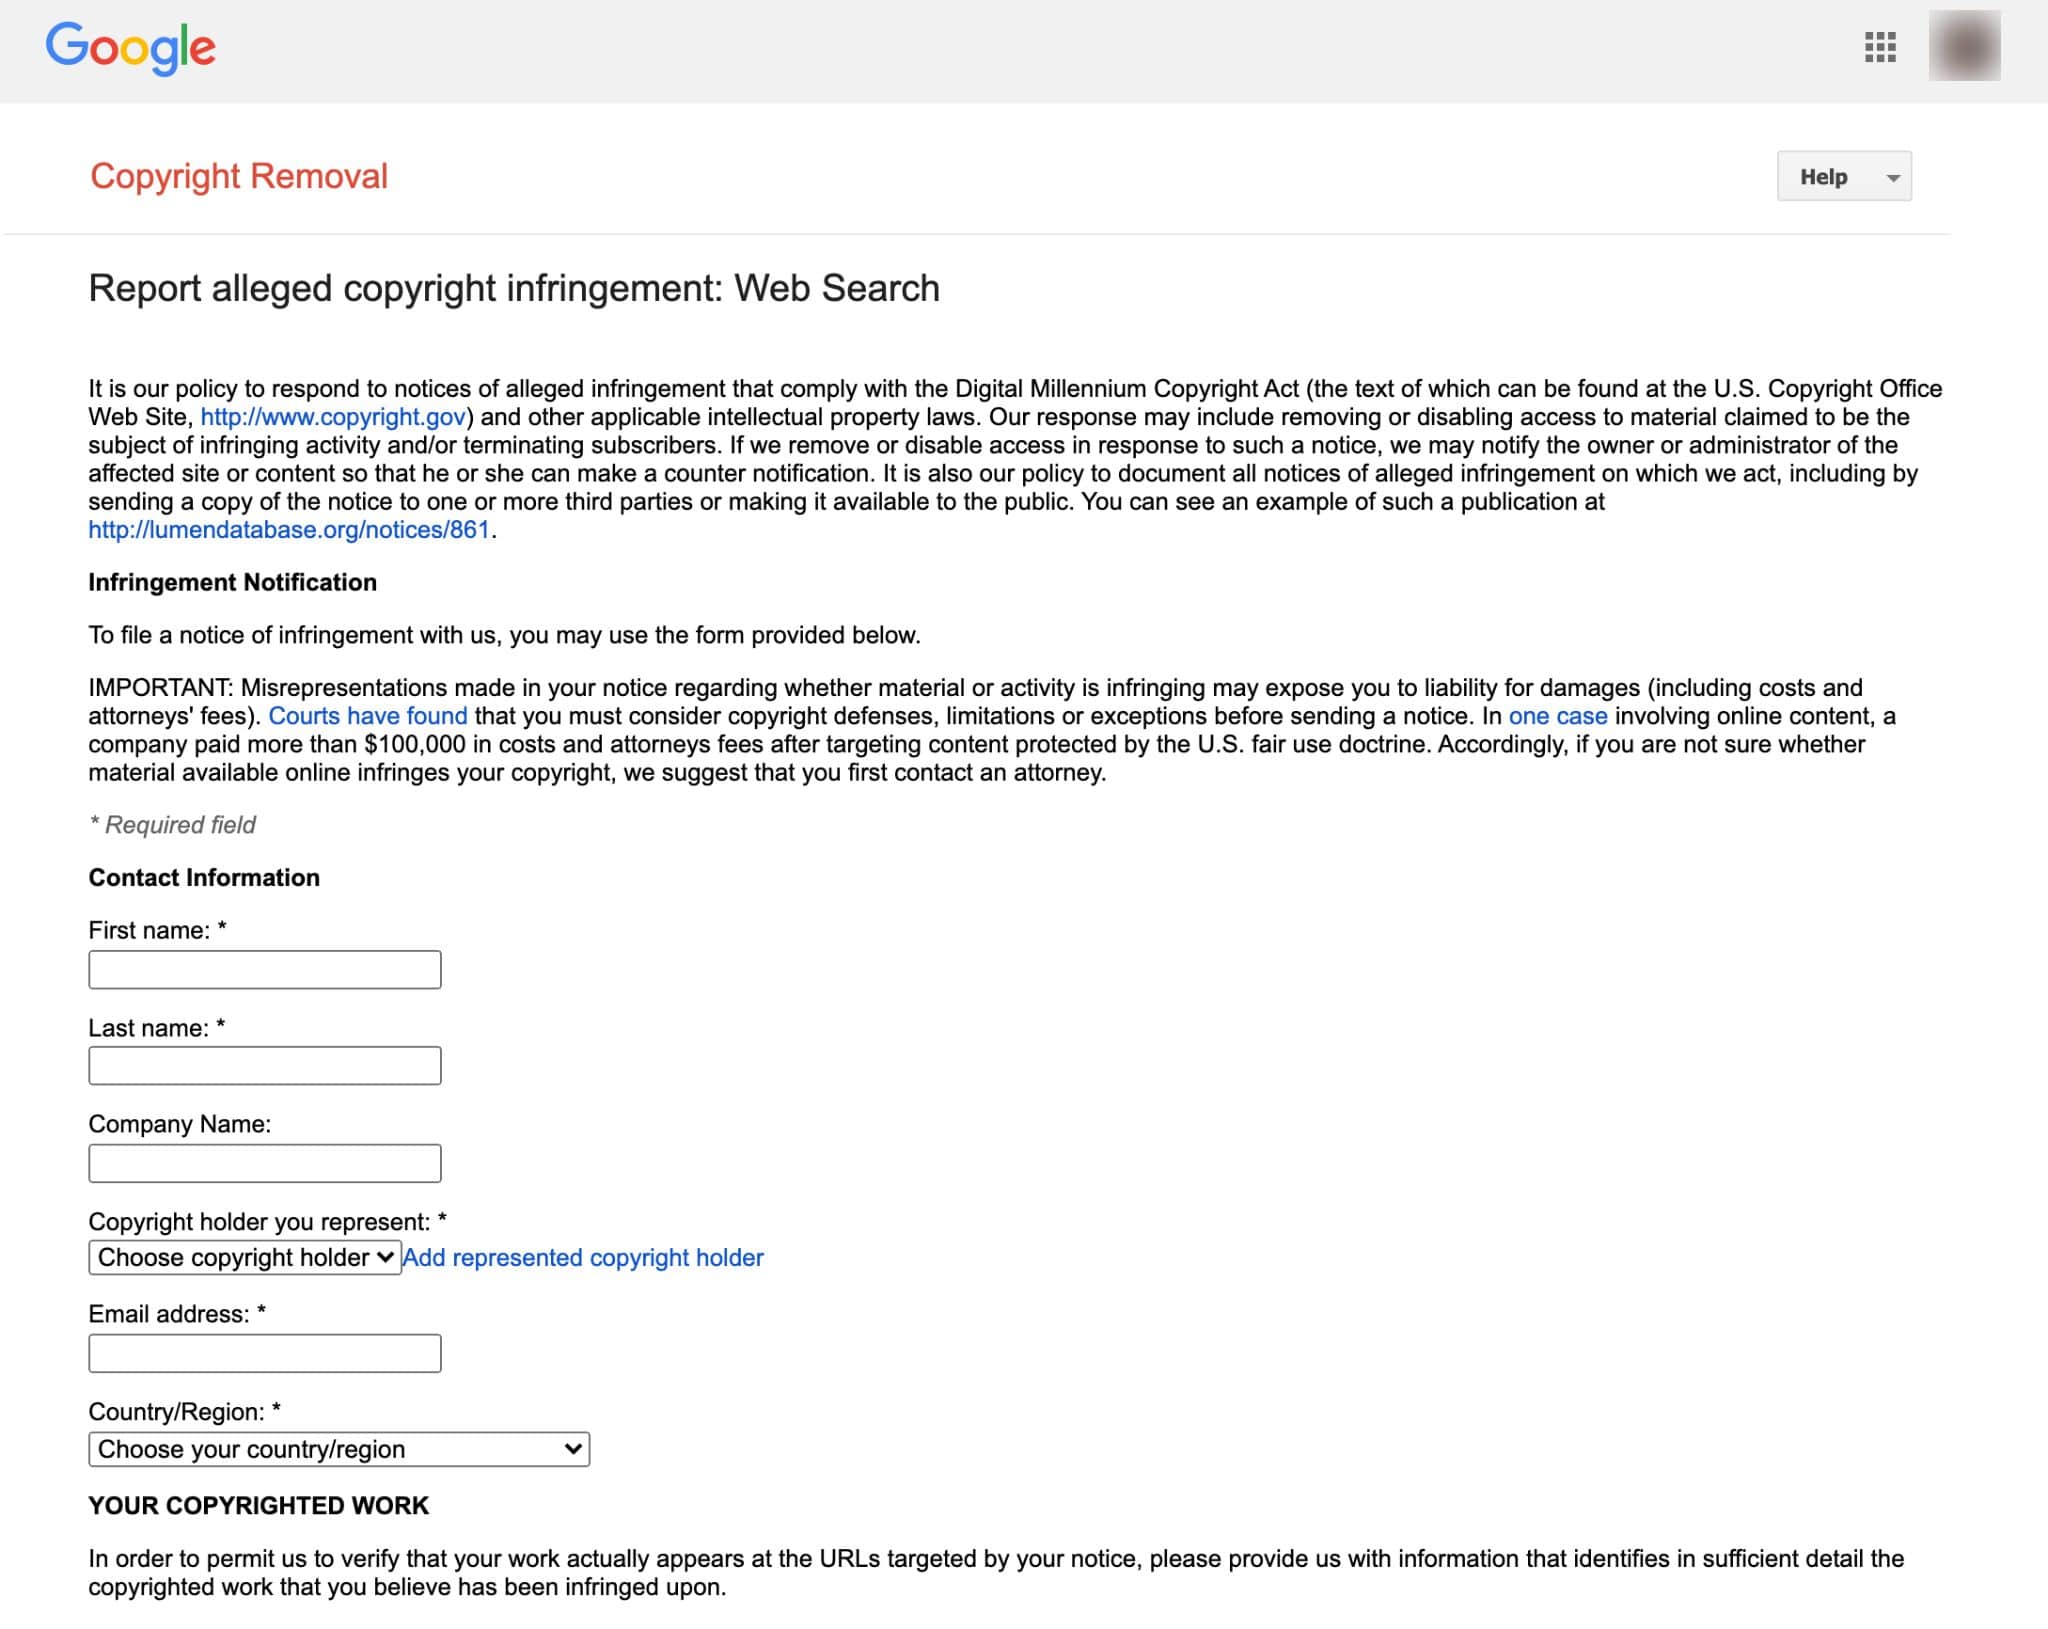 Google's DMCA form for copyright infringement.